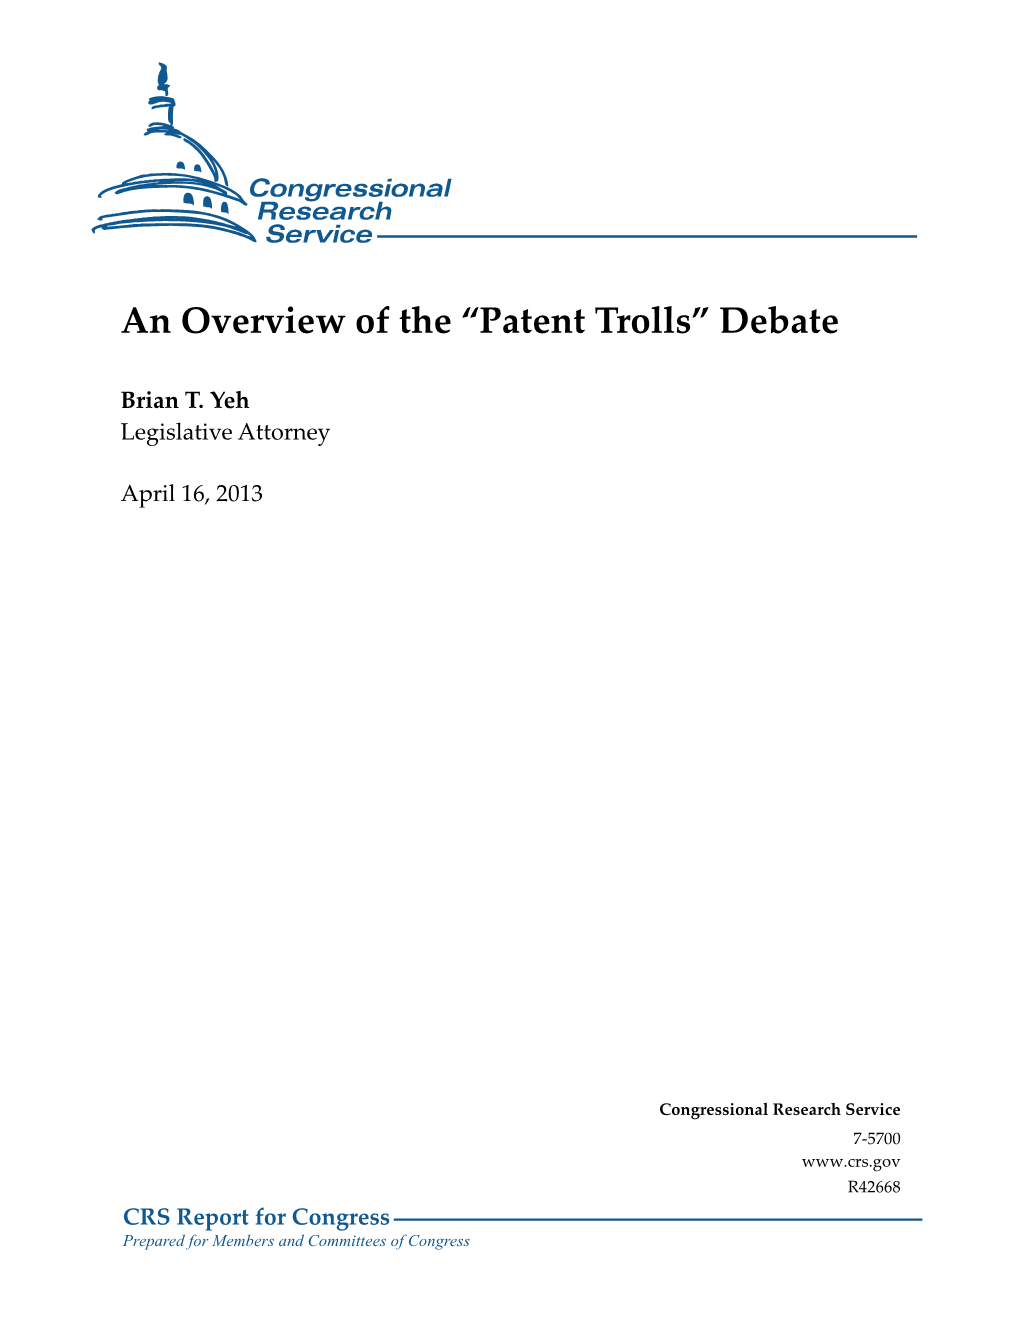 Patent Trolls” Debate